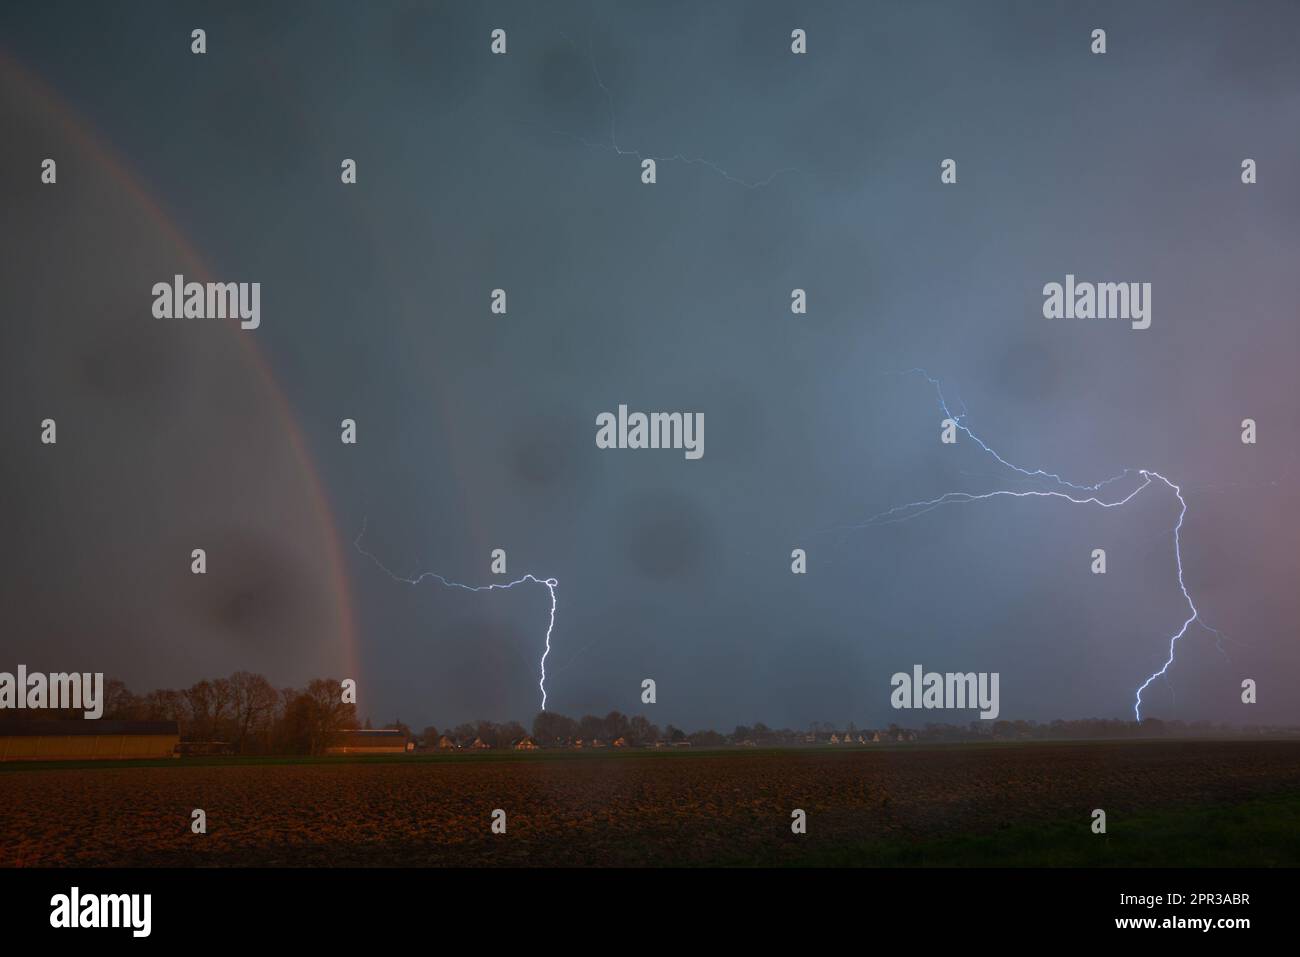 Lightning storm with rainbow. Raindrops on the lens. Stock Photo